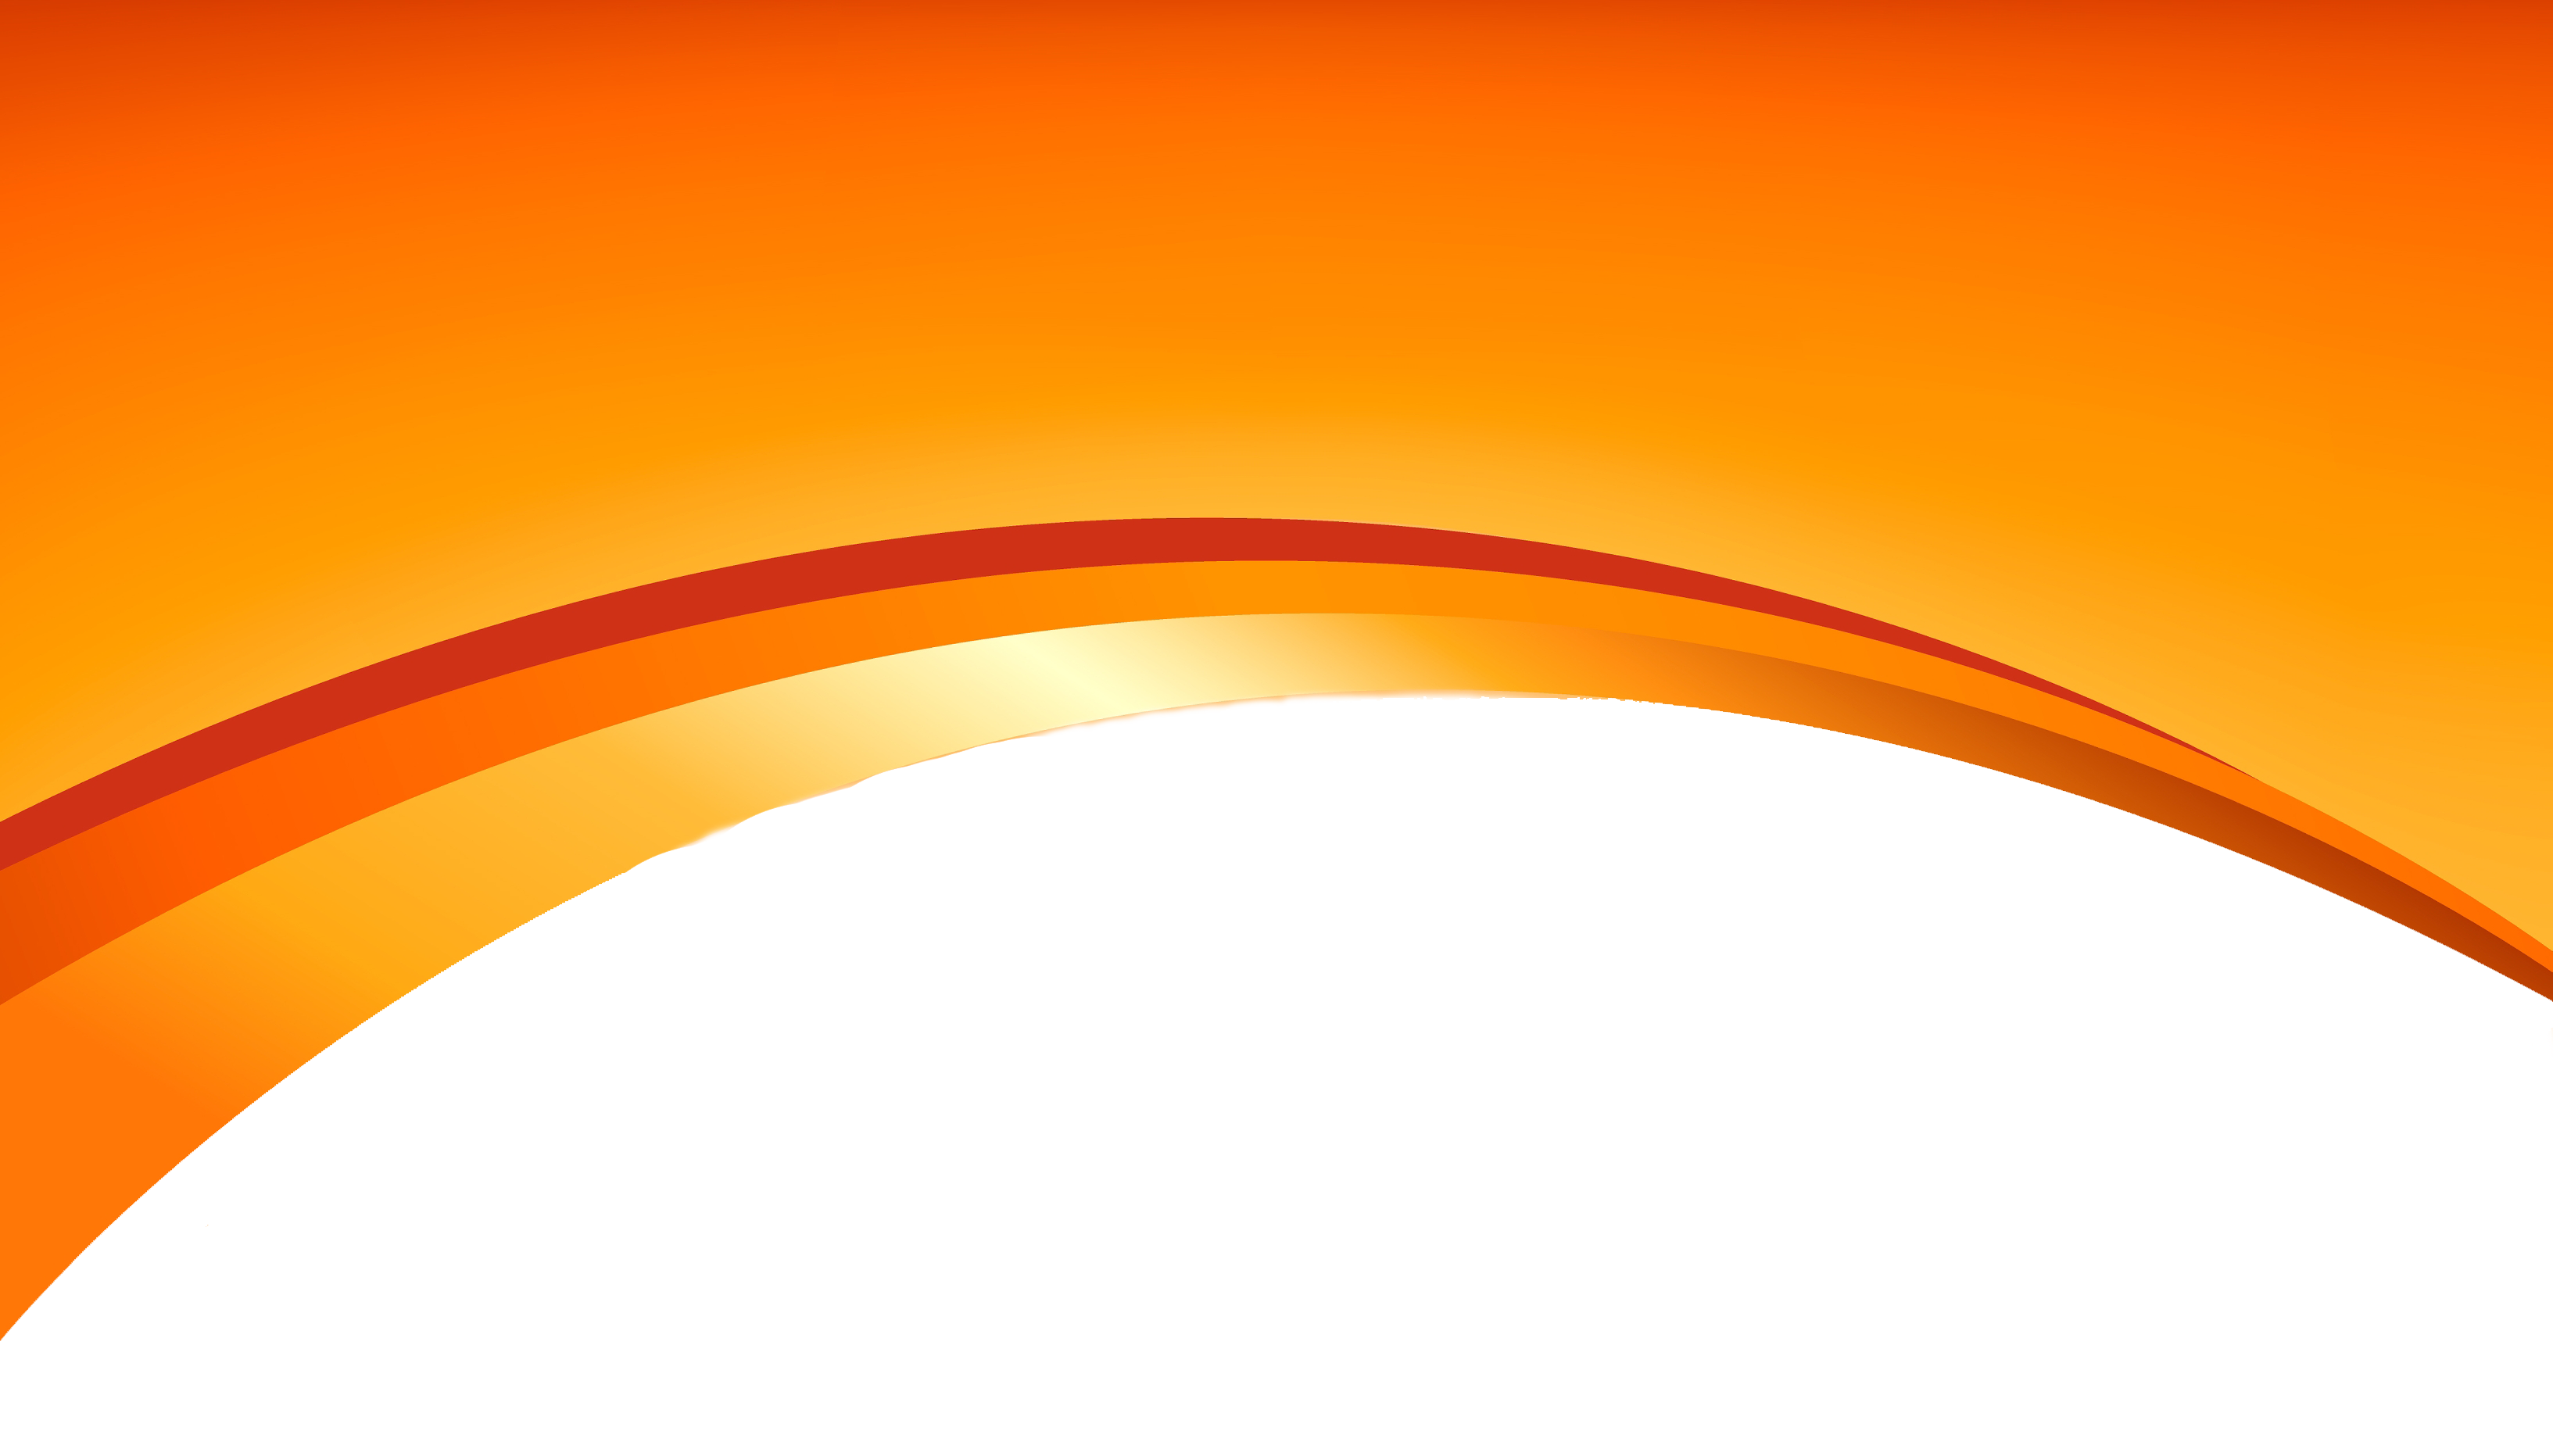 Intrawallpaper Background With Image Orange